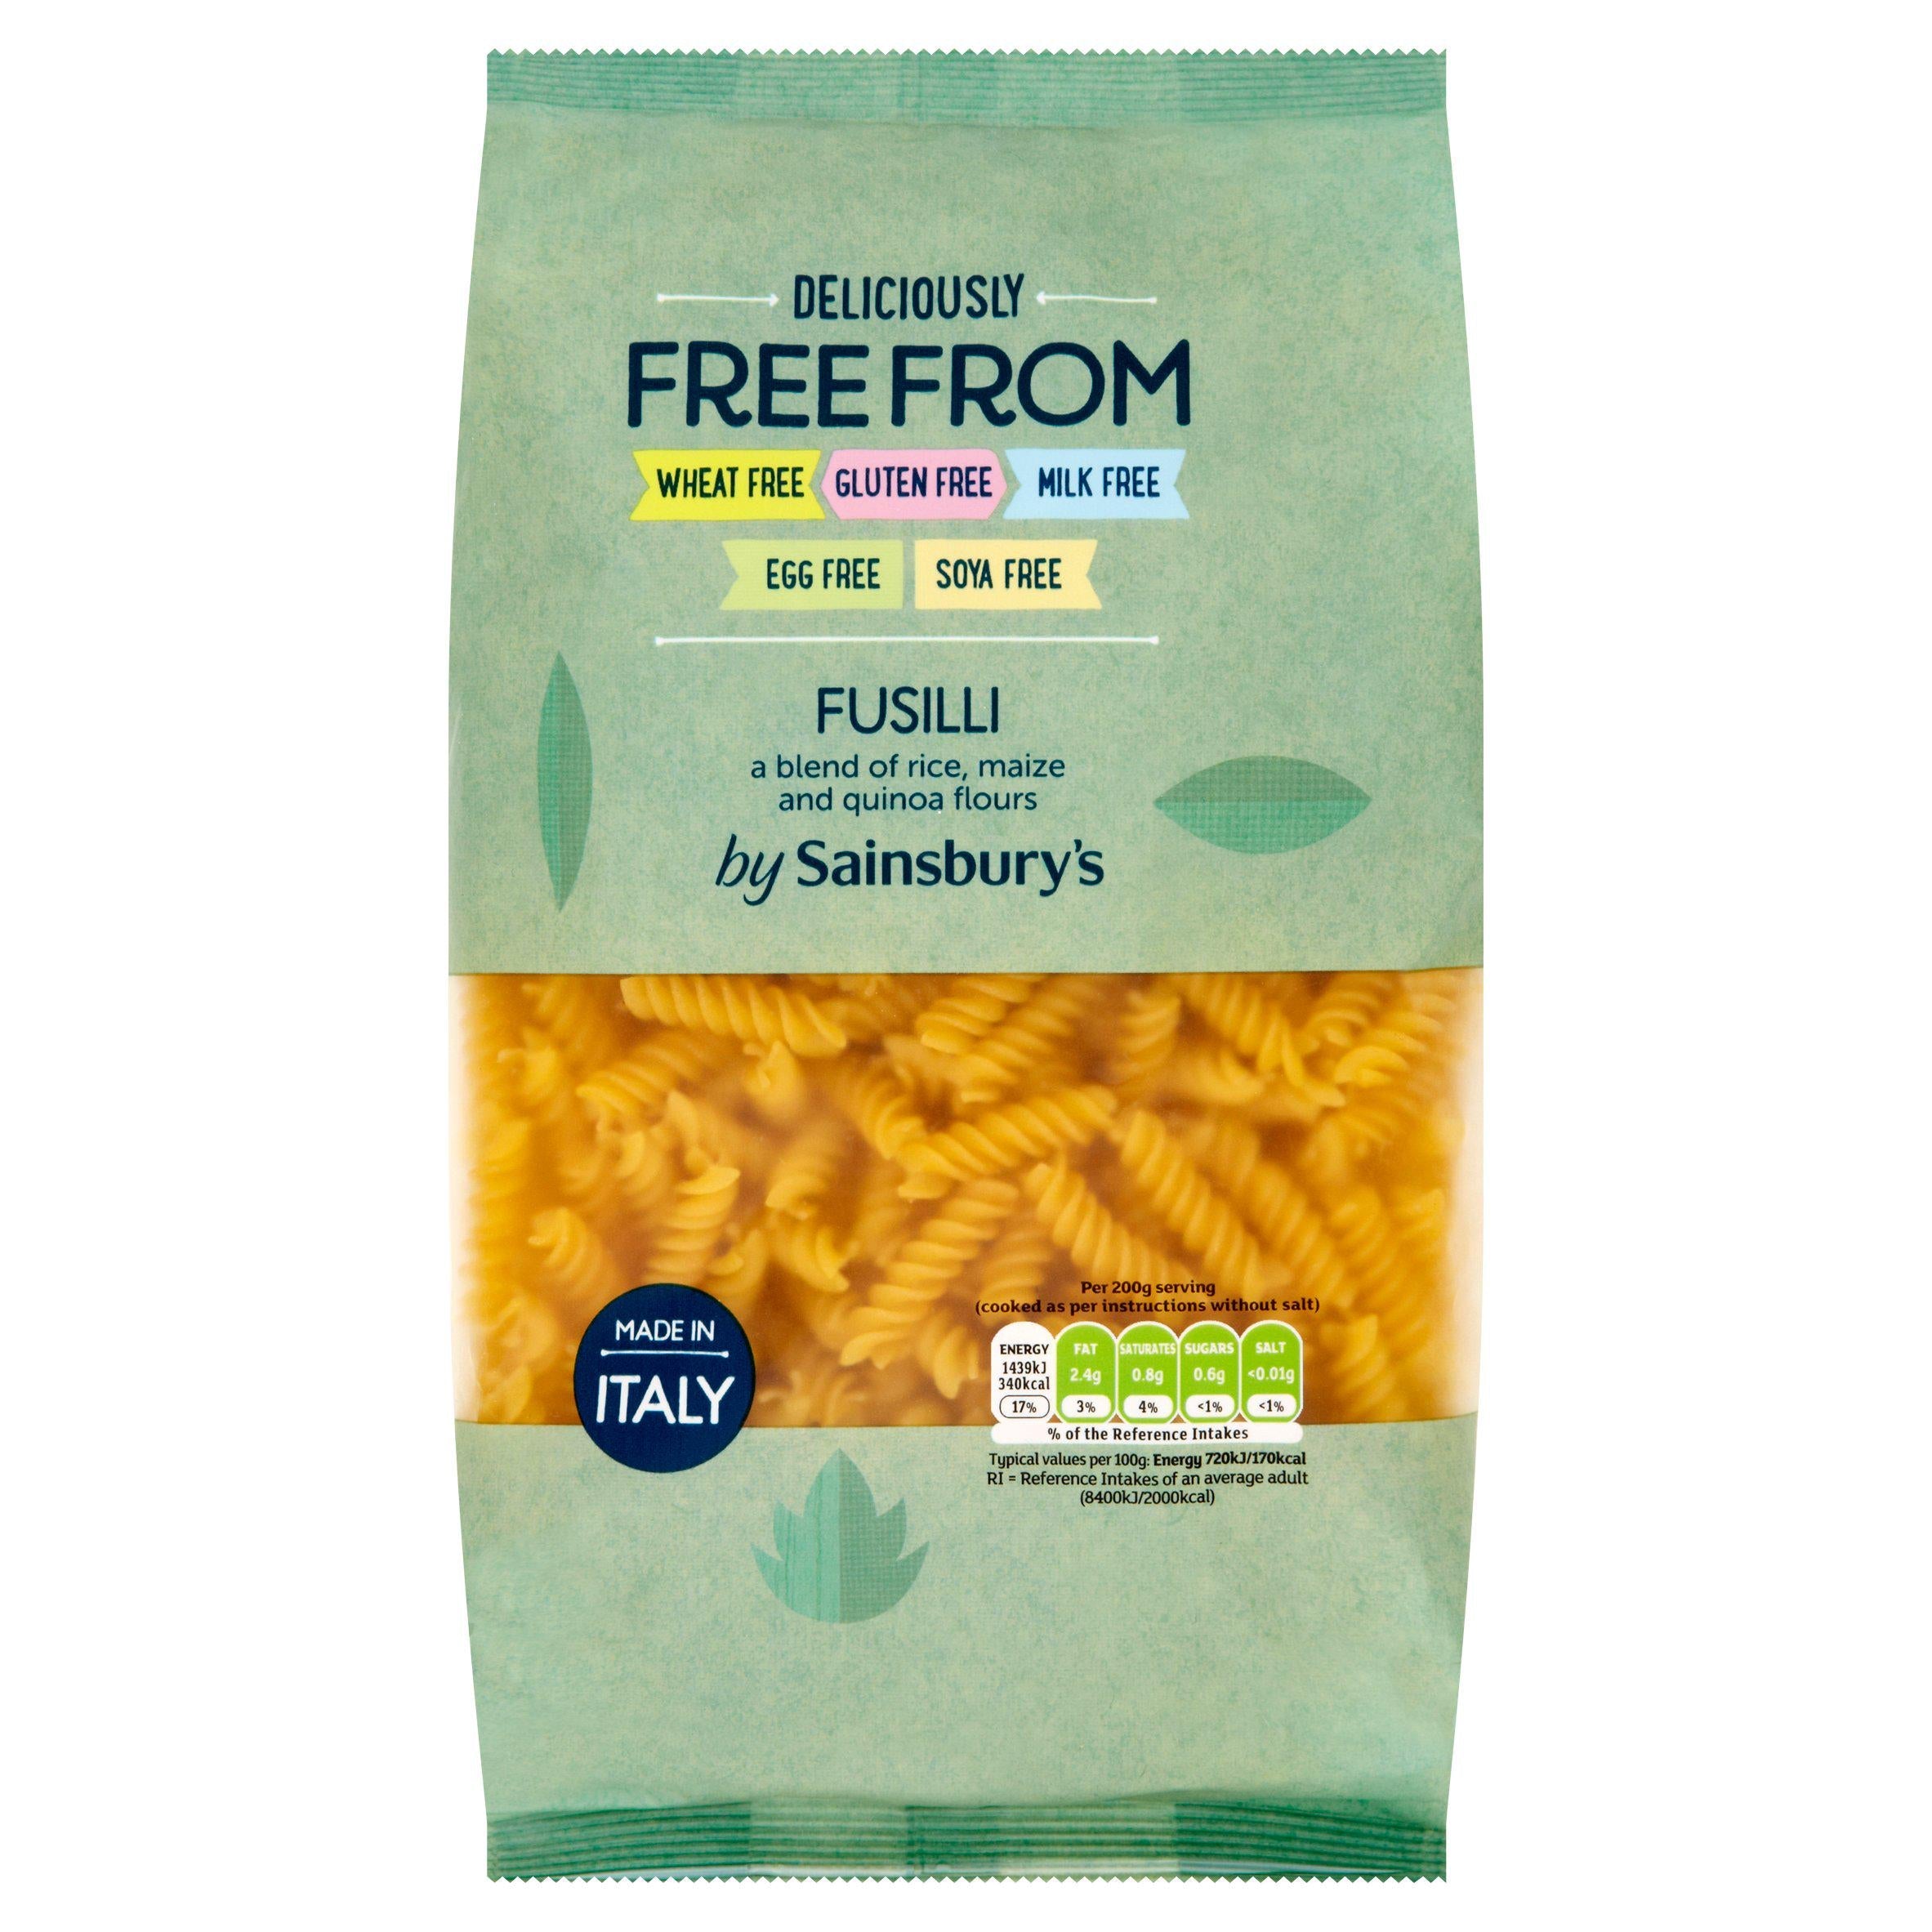 WSO - Sainsbury's Deliciously Free From Fusilli 500g 1x12